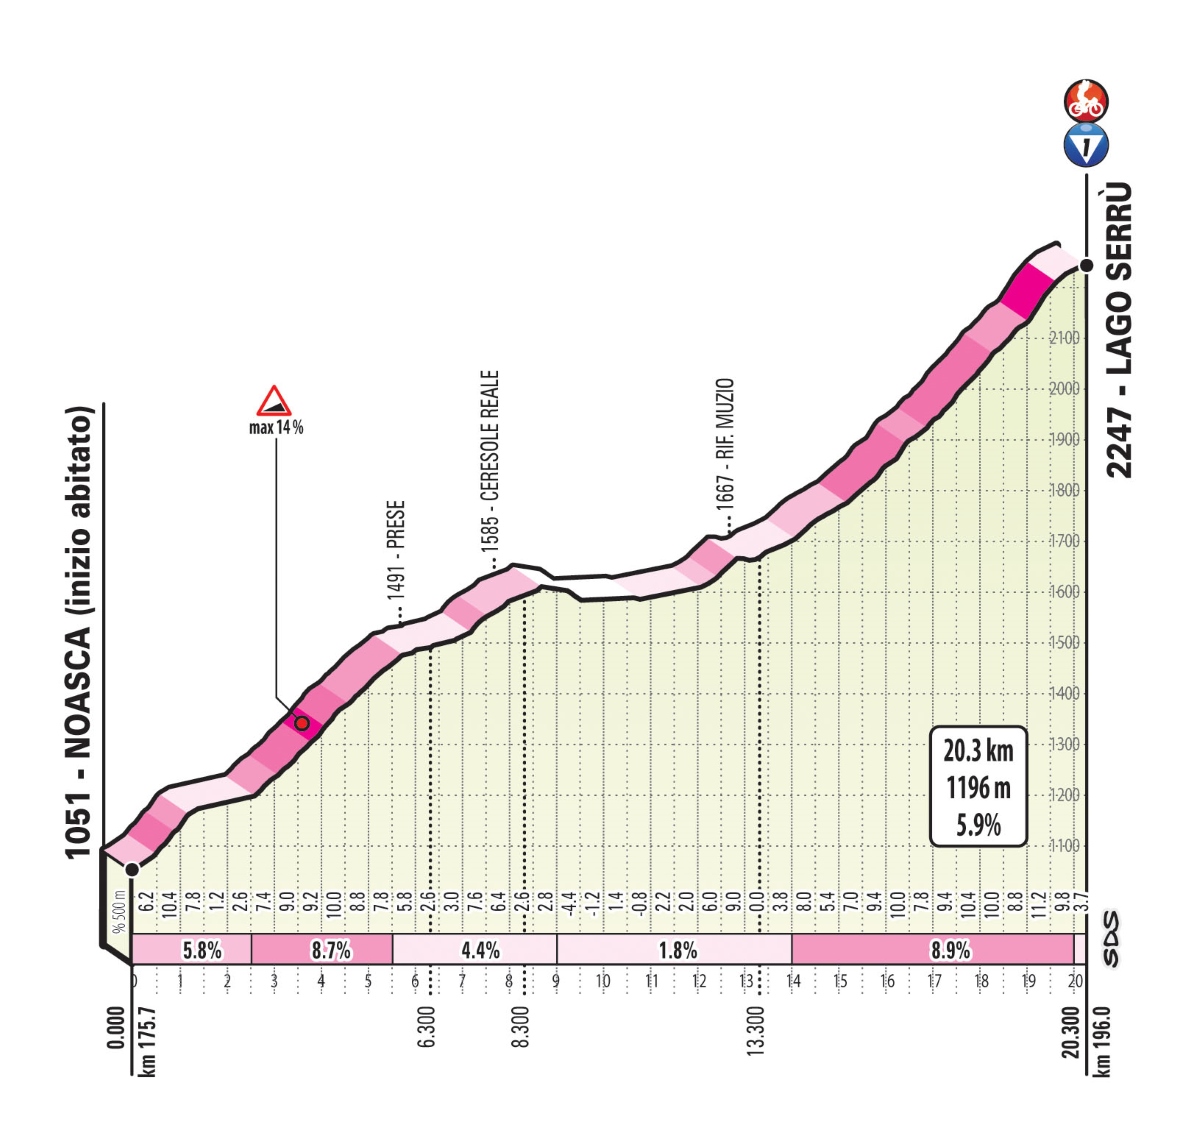 Giro-ditalia-2019-Tappa-13-Salita-Cereso